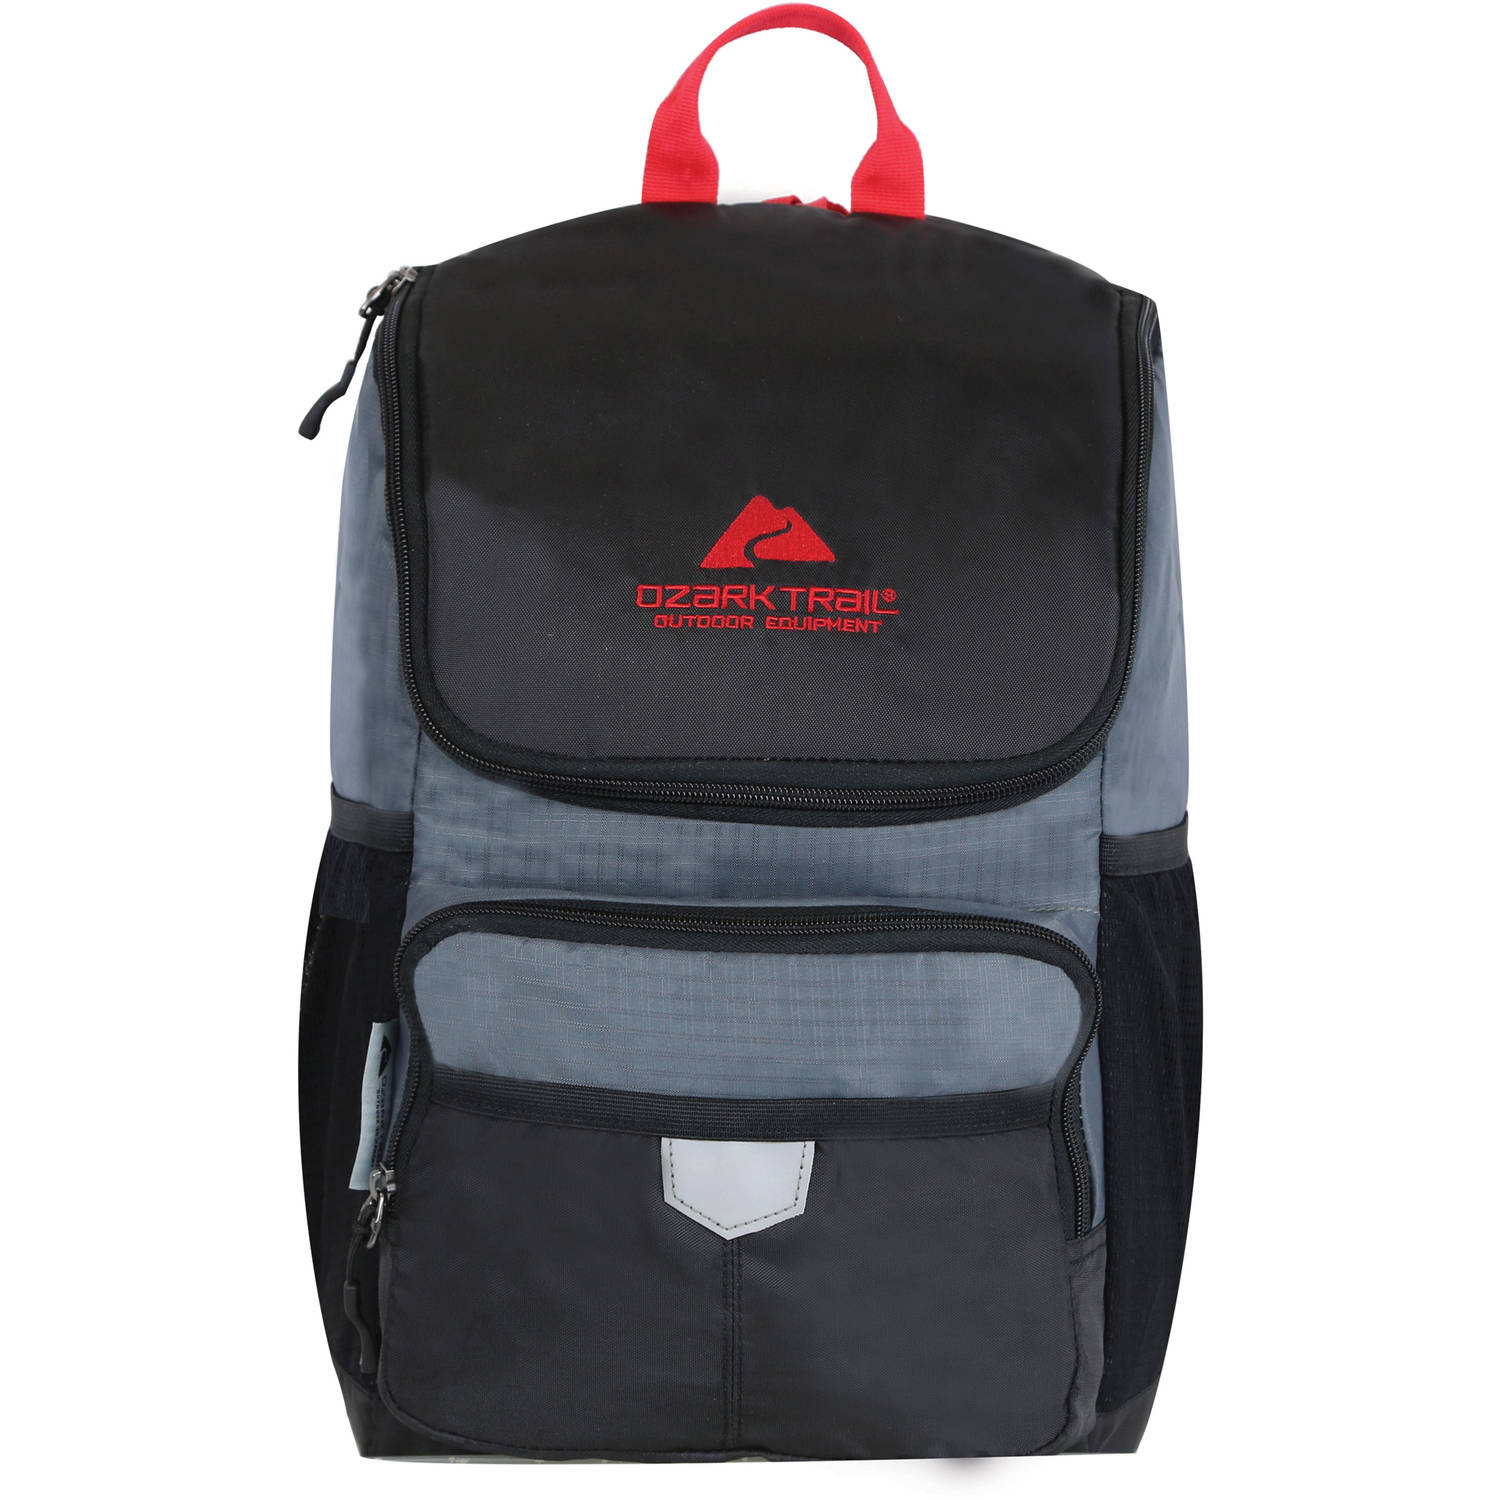 Ozark Trail 24-Can Thermal Insulated Soft Side Cooler Backpack, Black - Walmart.com $9.95